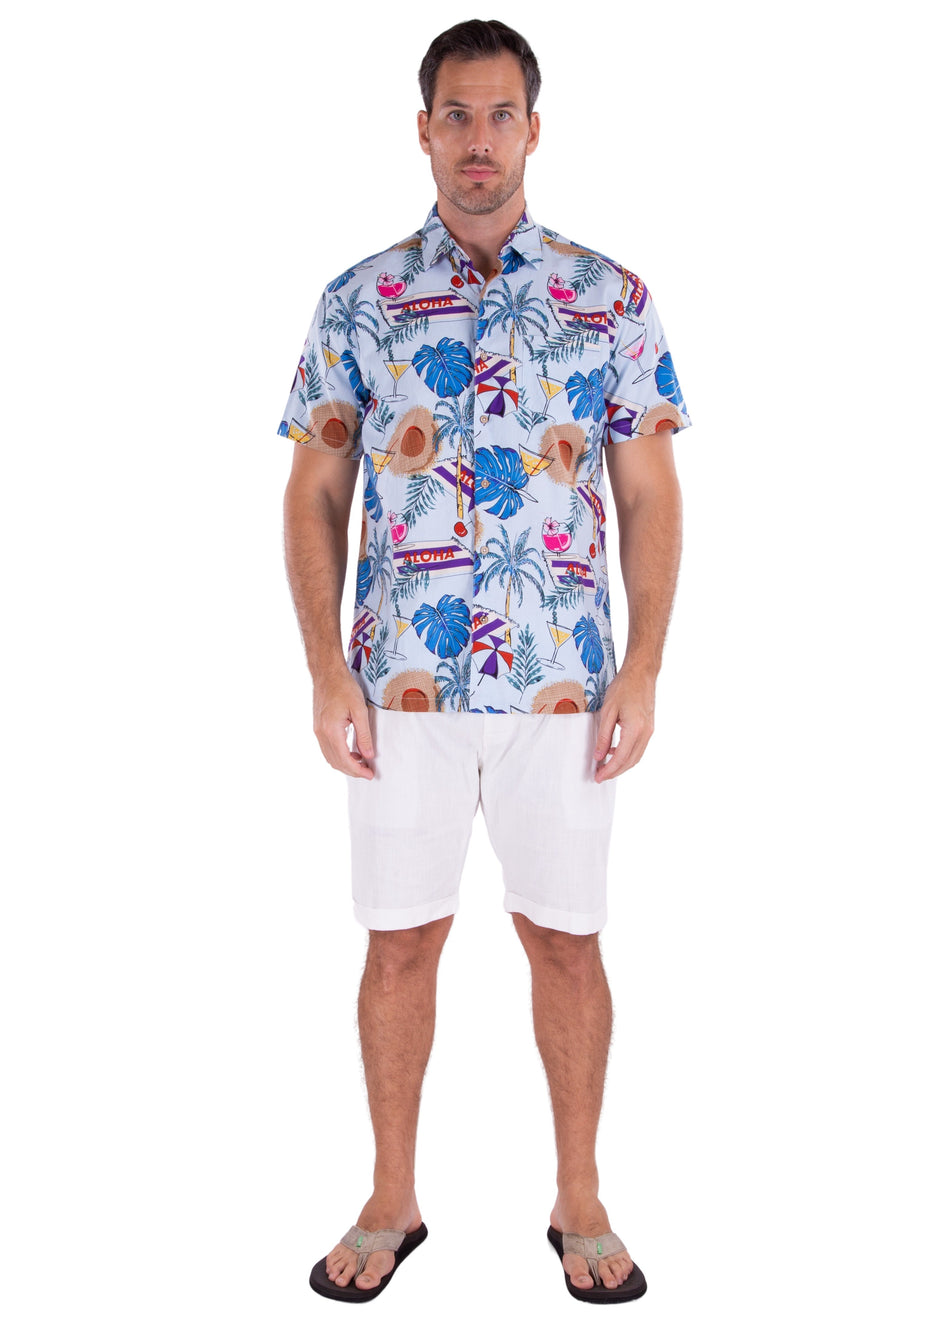 226001 - Blue Cotton Hawaiian Shirt